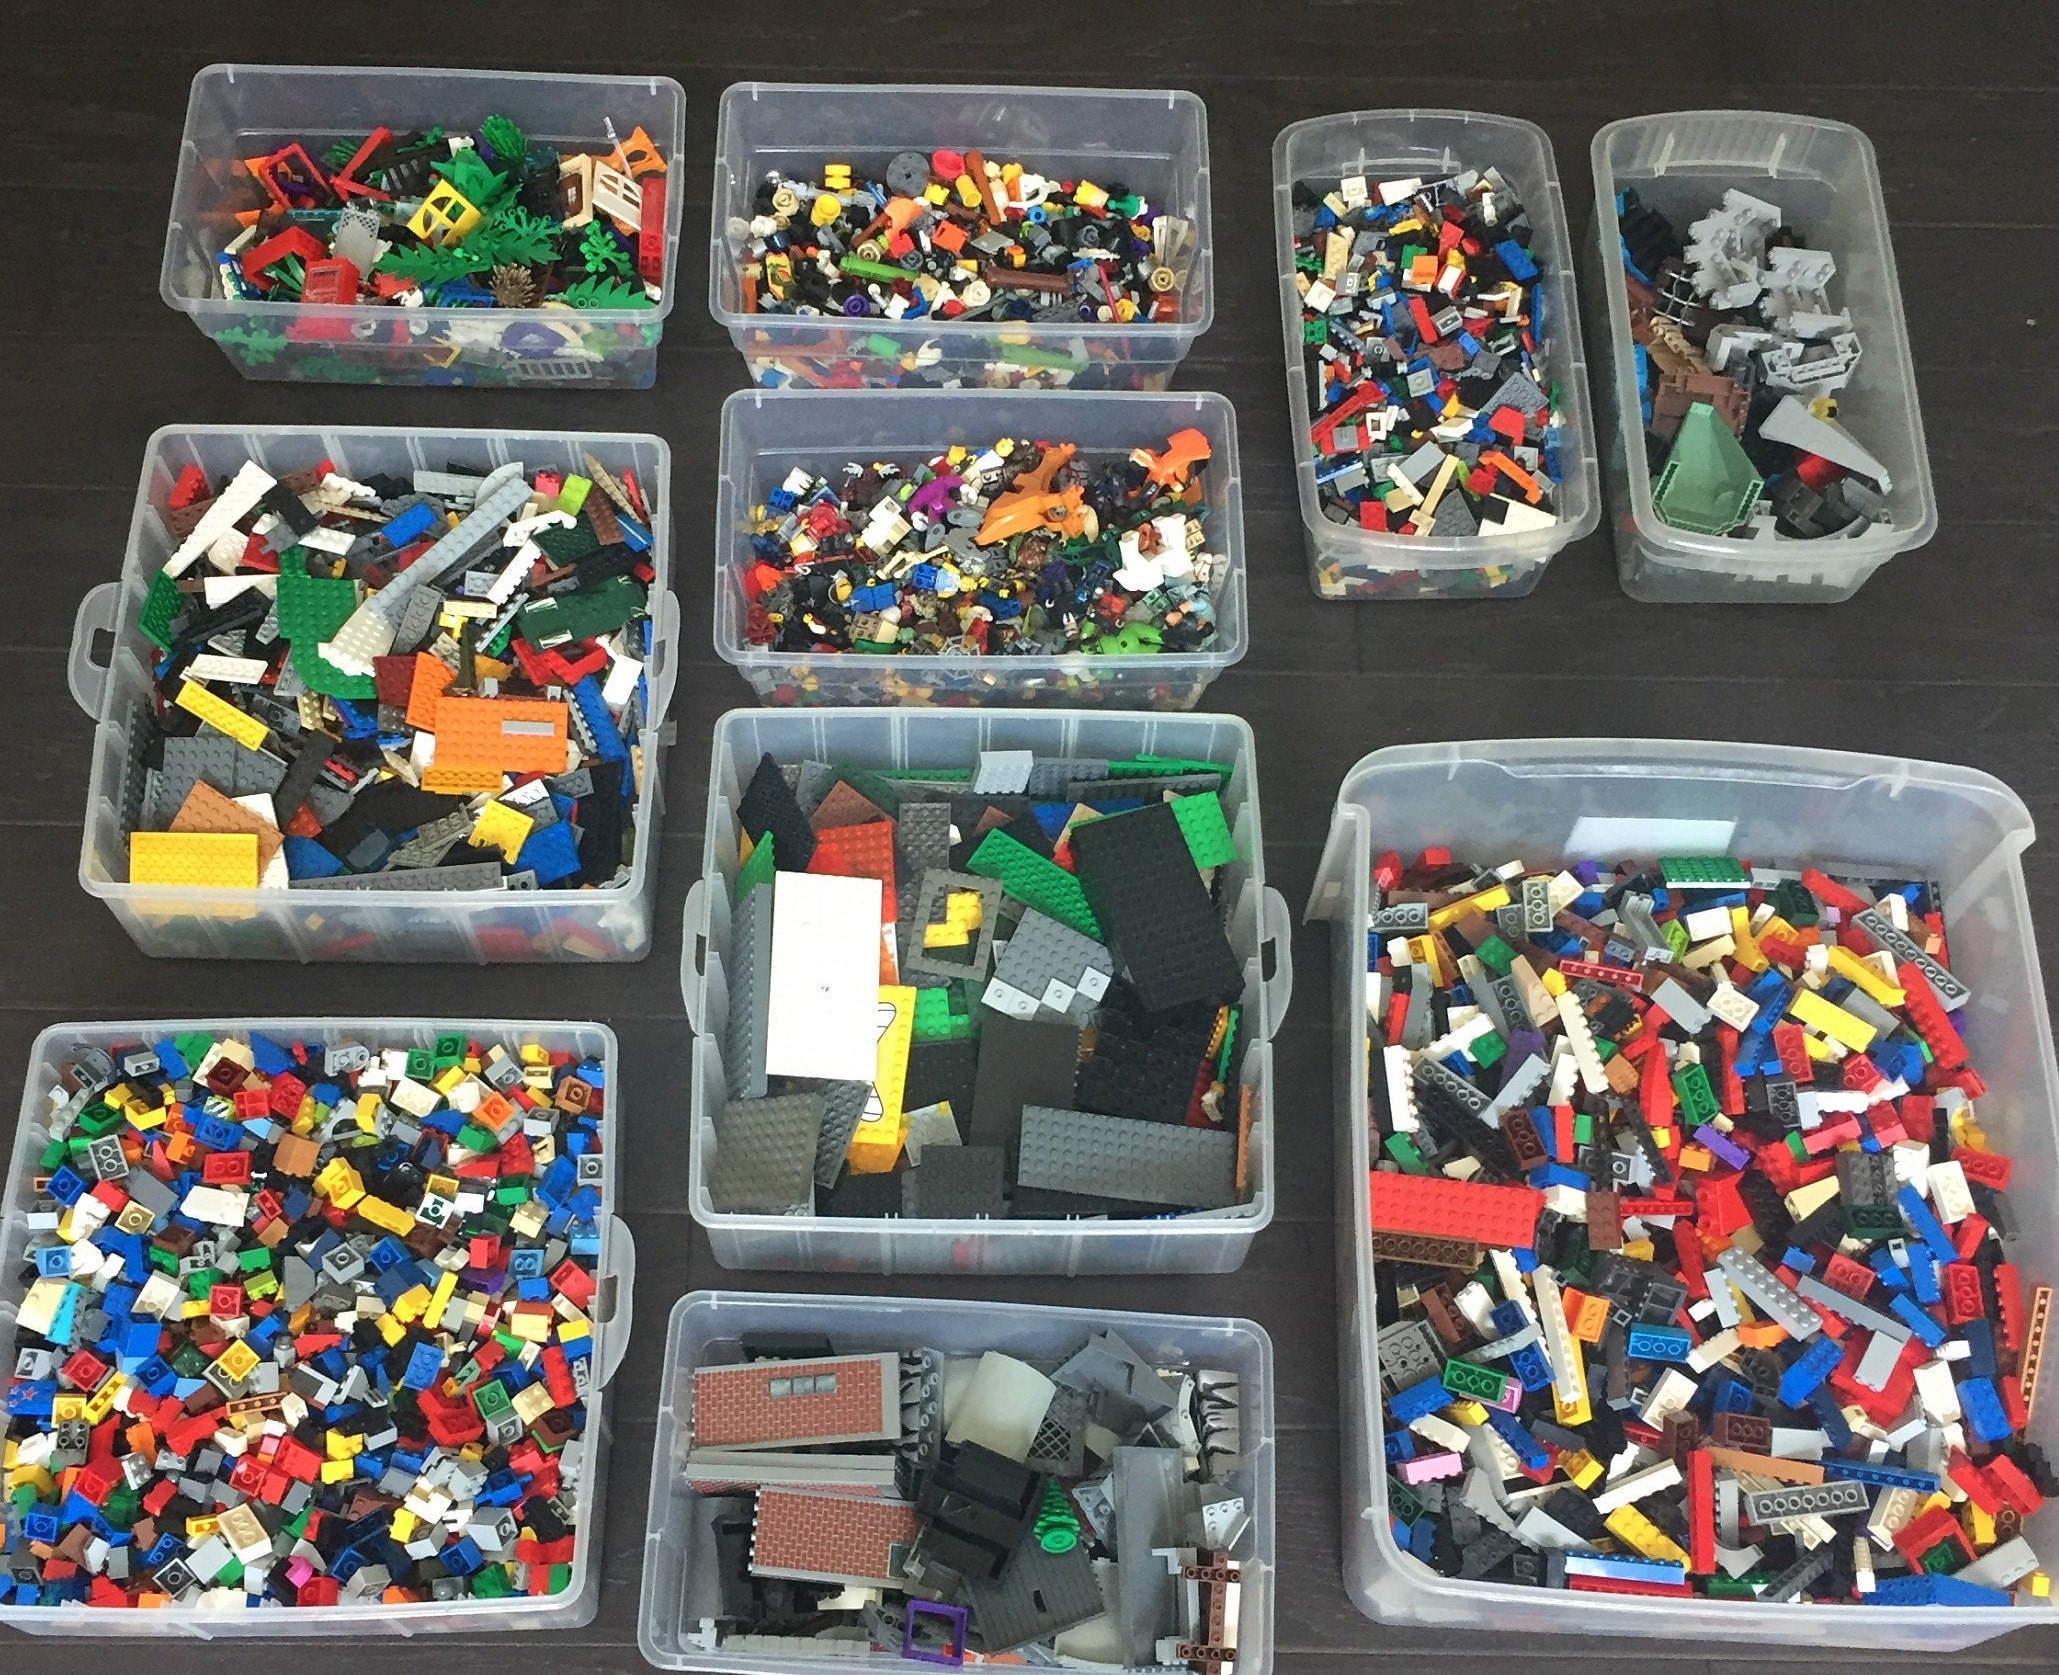 1 POUND LB OF LEGOS LEGO RANDOM PIECES FROM HUGE BULK LOT BRICKS 